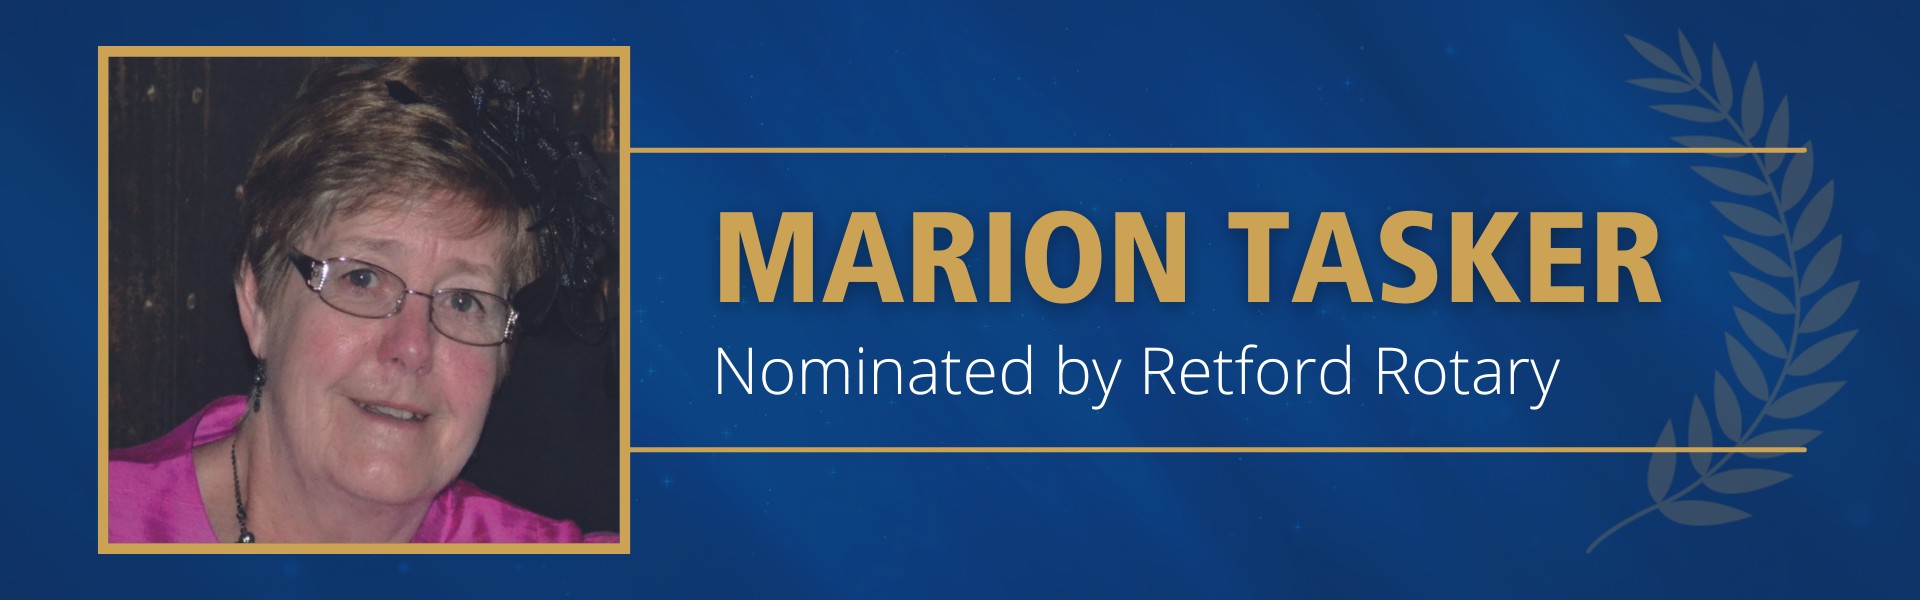 Marion Tasker Nominated by Retford Rotary